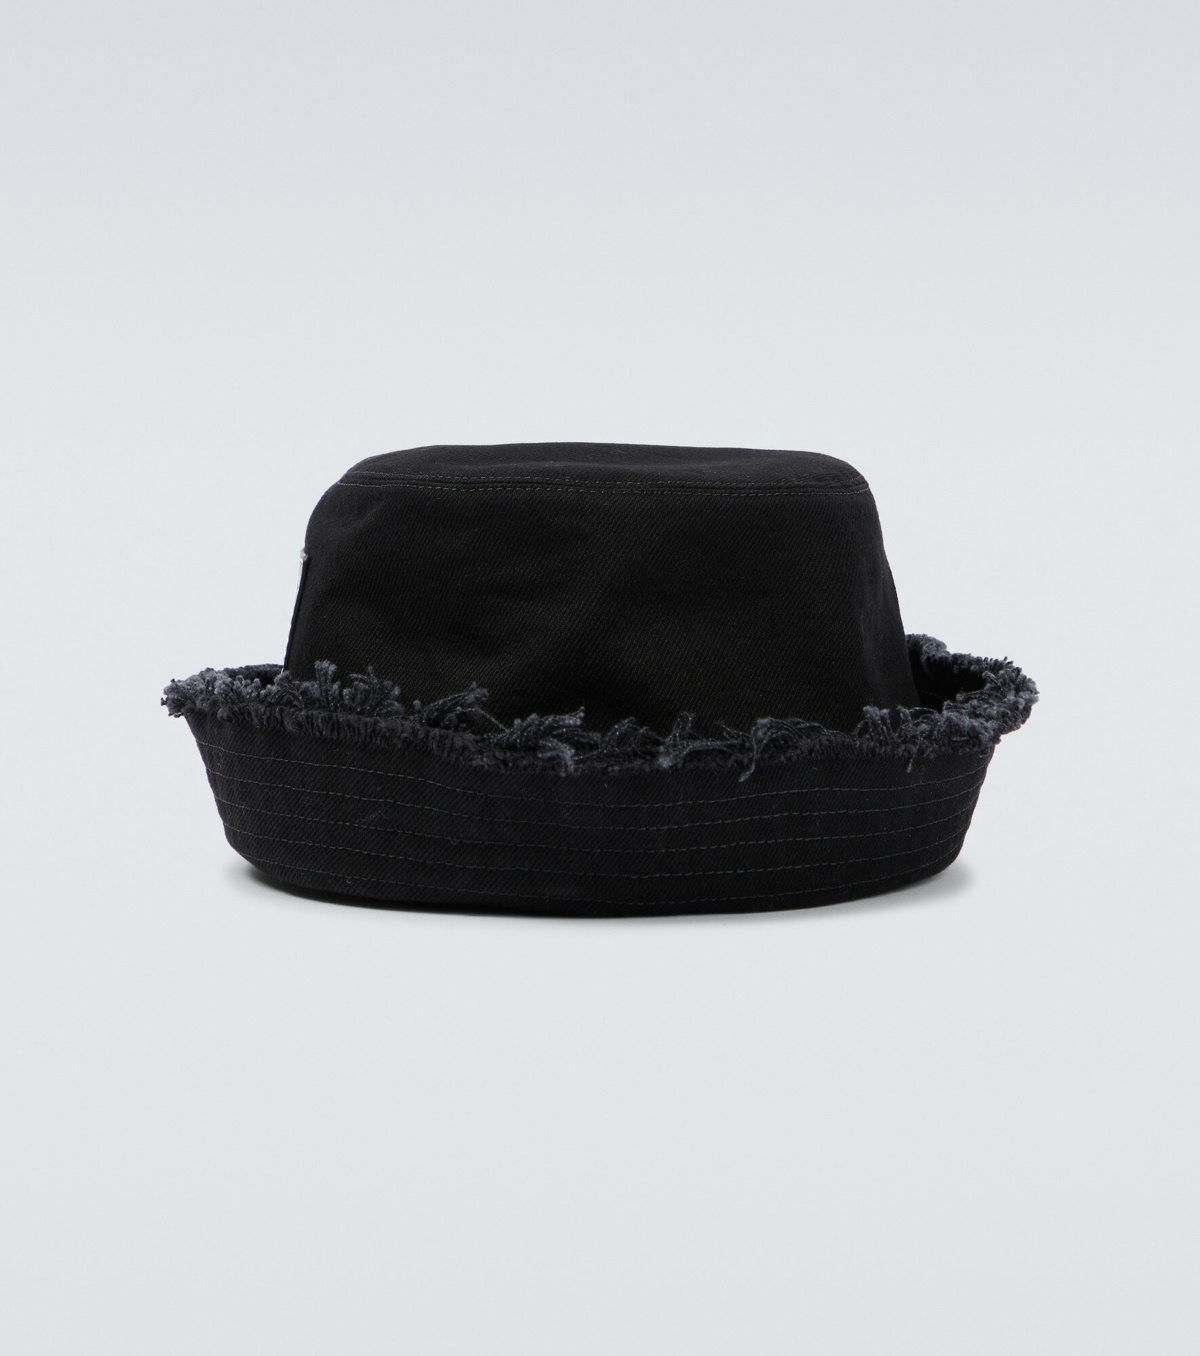 Paulas Ibiza Frayed Denim Bucket Hat in Blue - Loewe